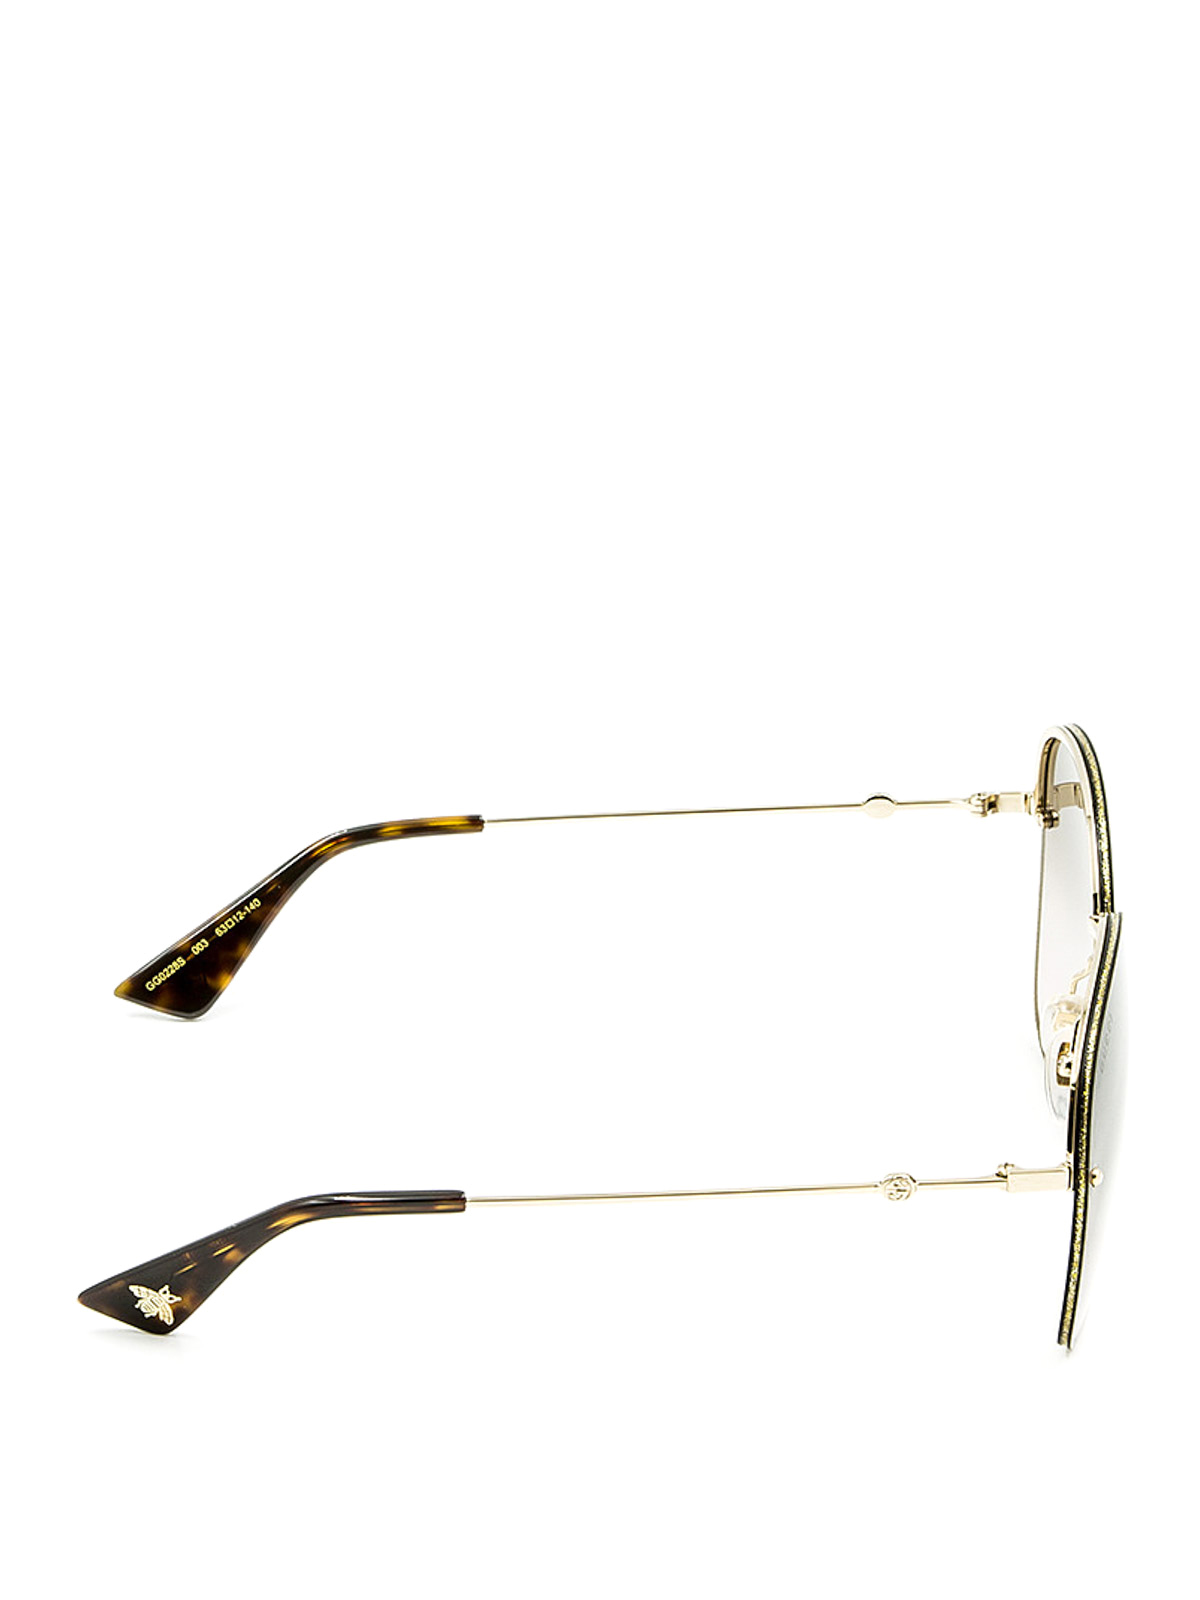 gucci square frame metal glasses